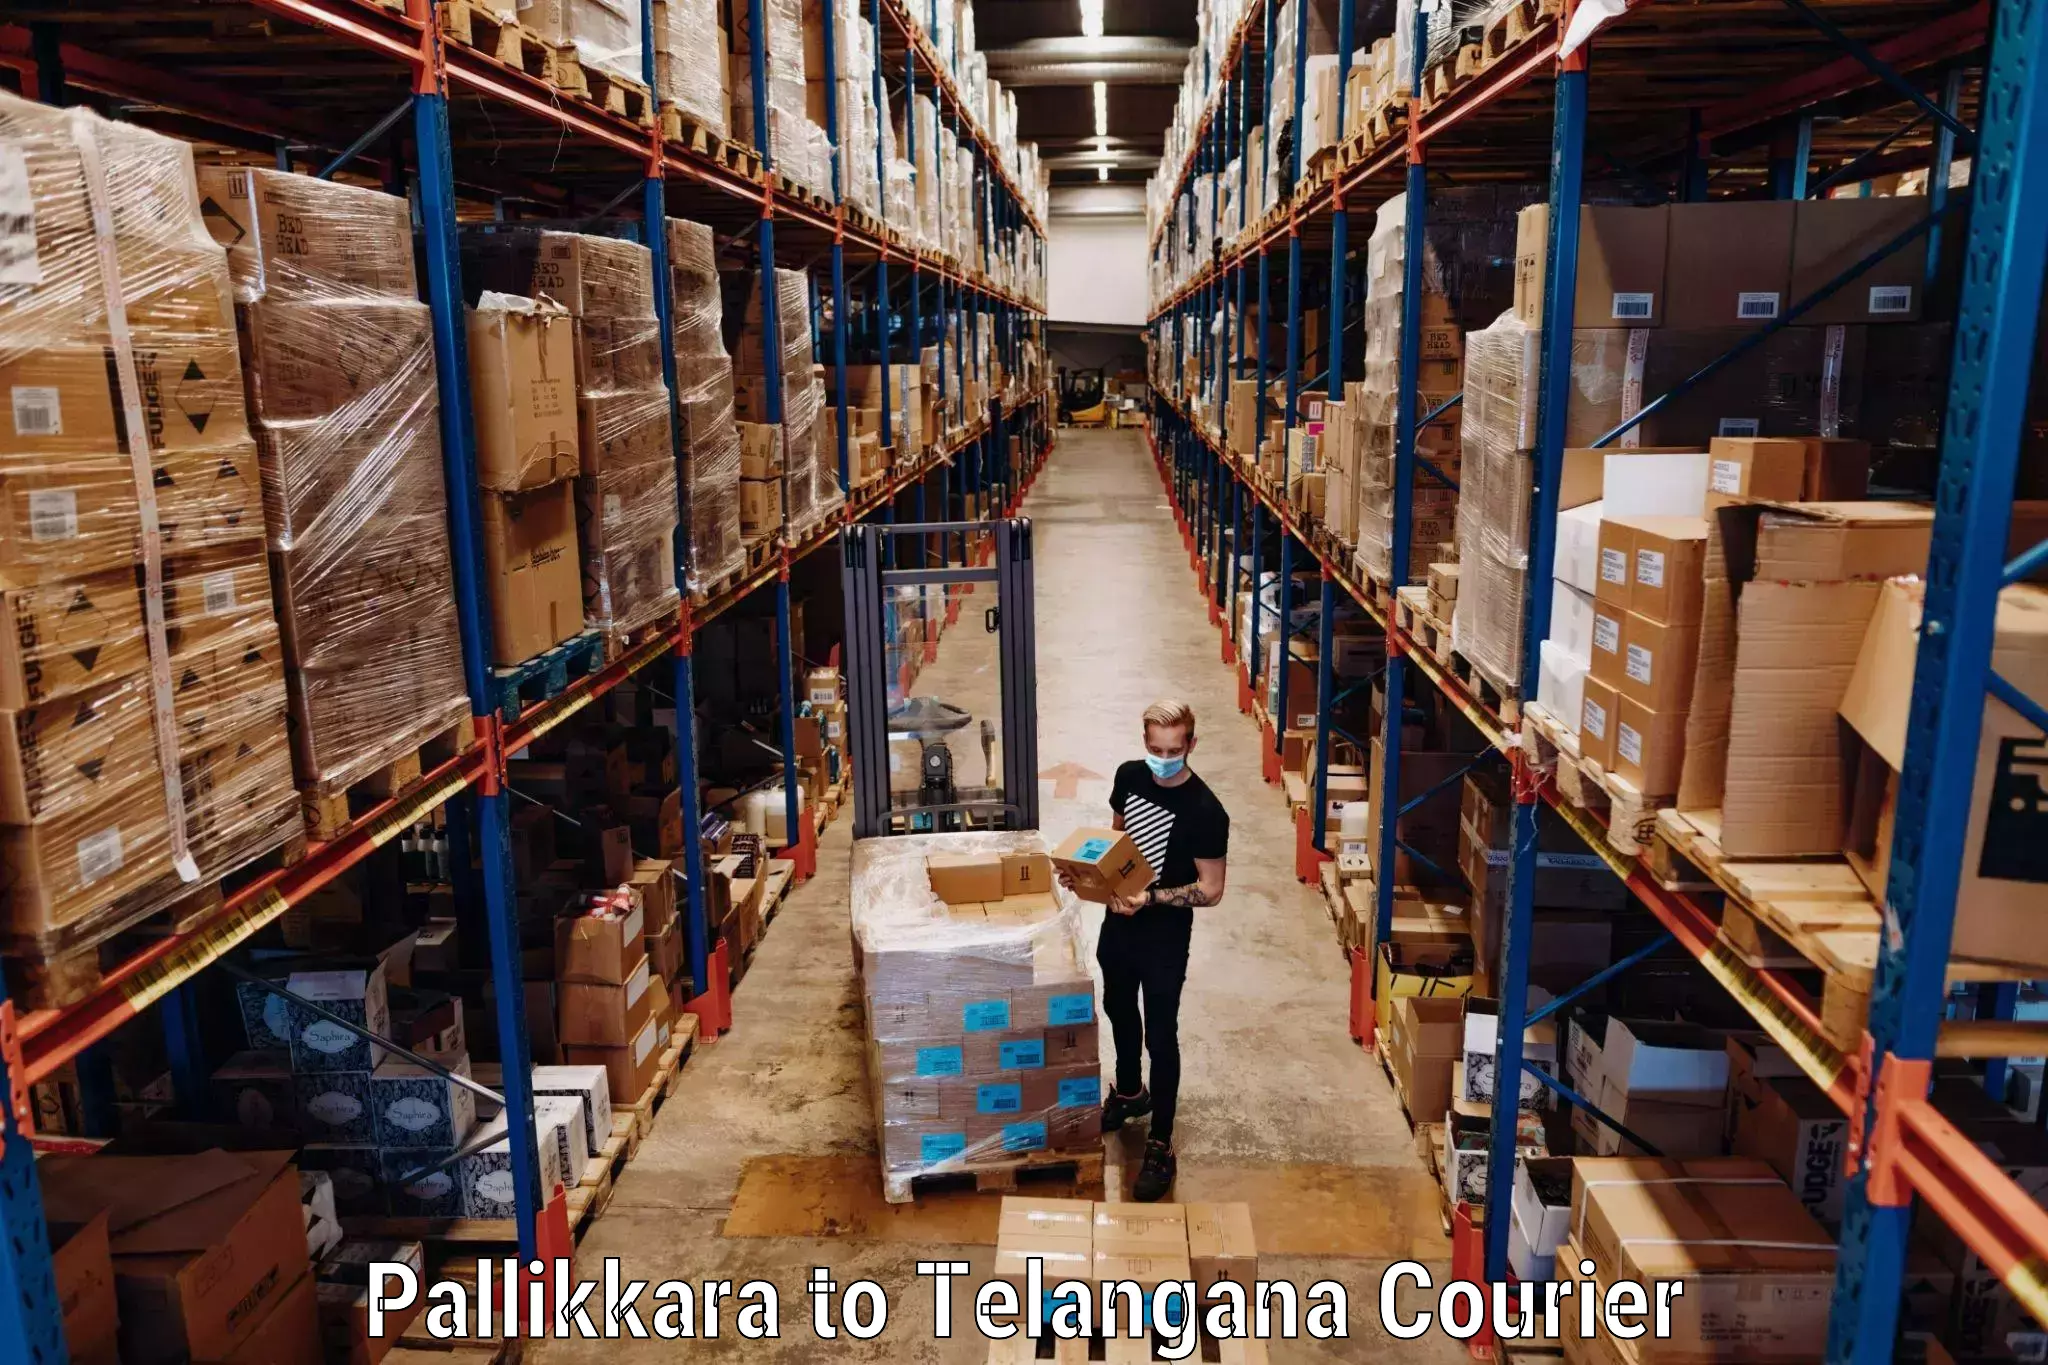 Baggage relocation service Pallikkara to Alair